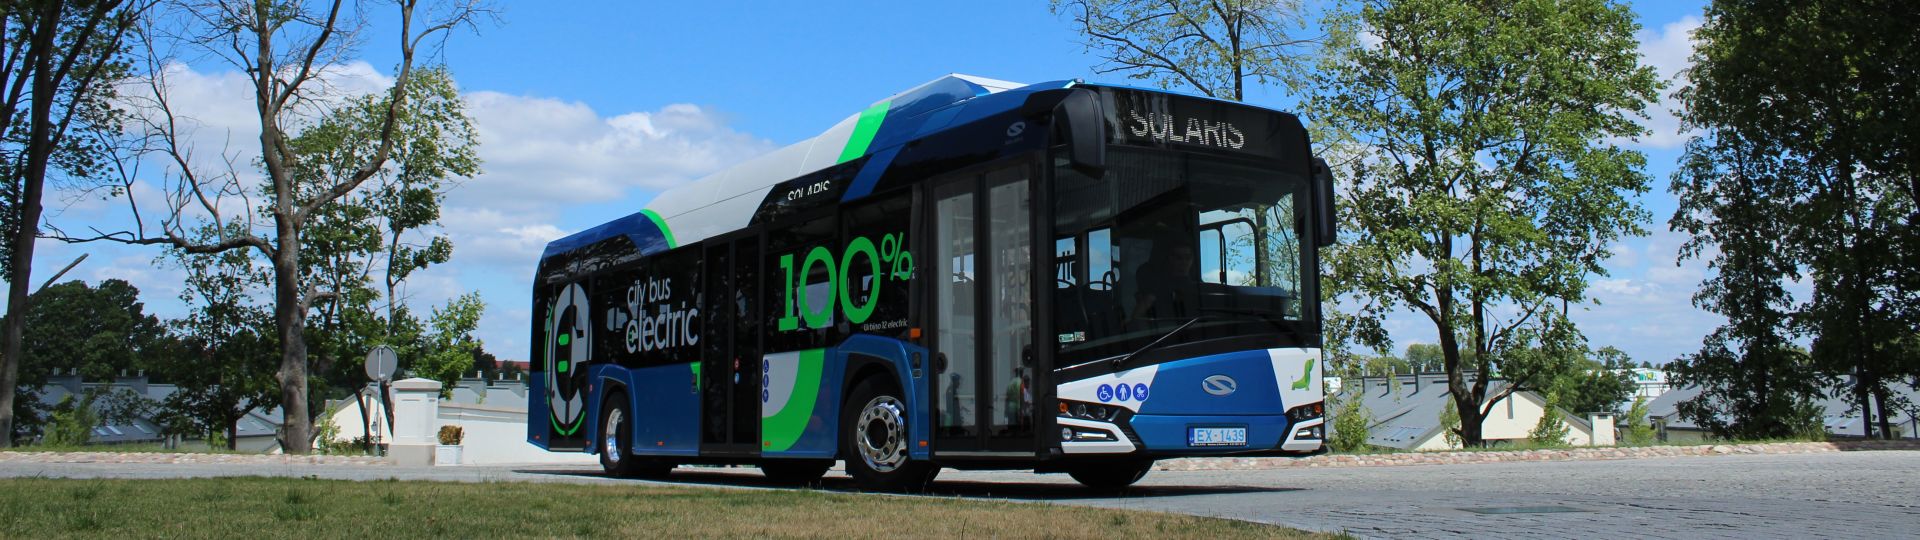 Elektrobus von Solaris in Erprobung in Estland